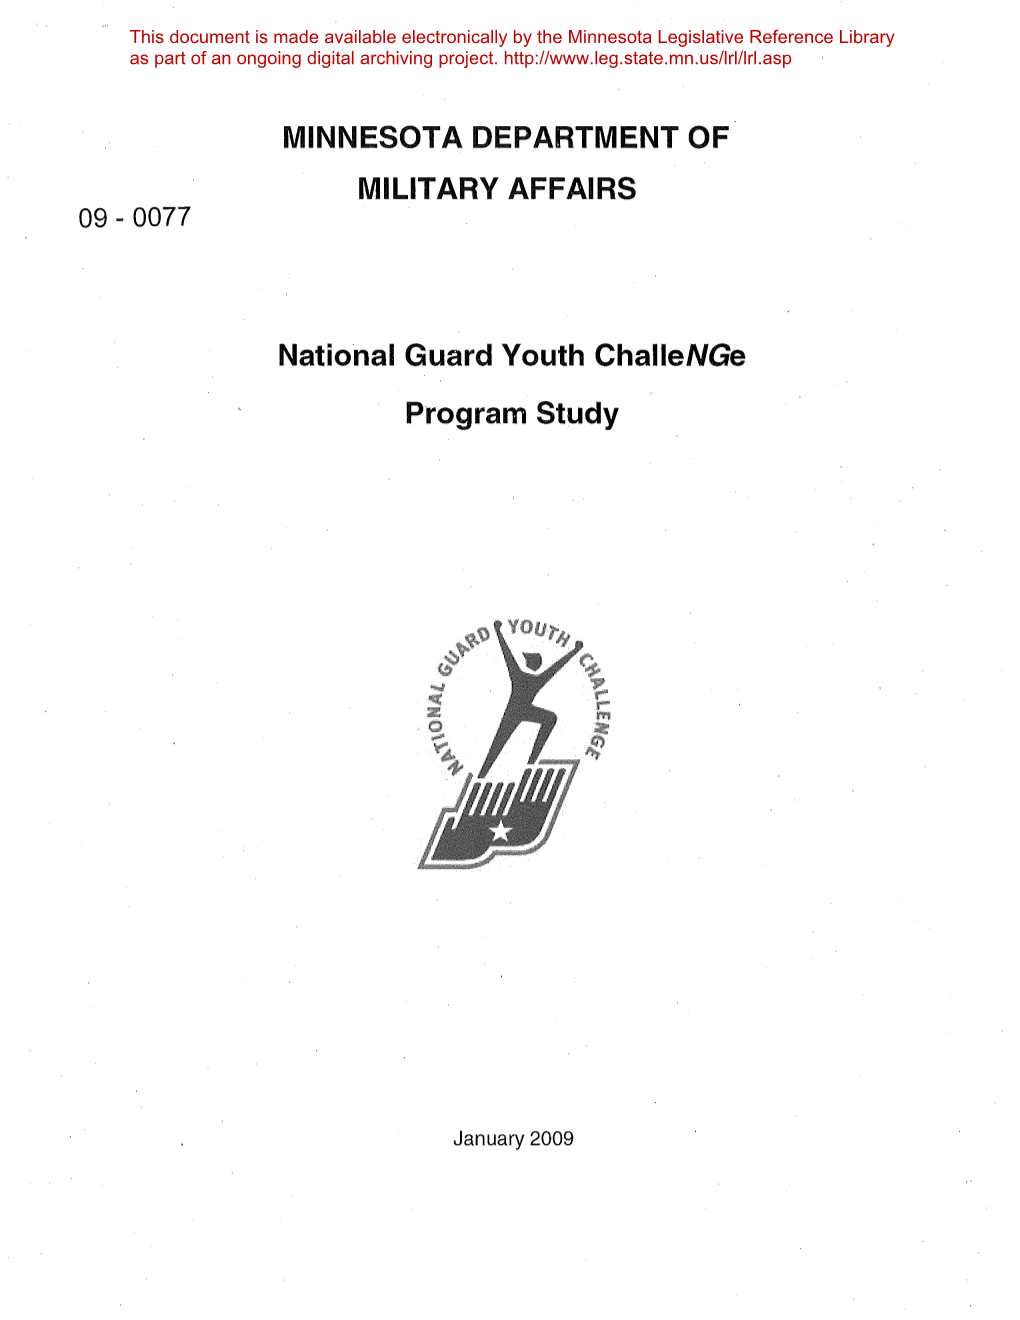 MINNESOTA DEPARTMENT of MILITARY AFFAIRS National Guard